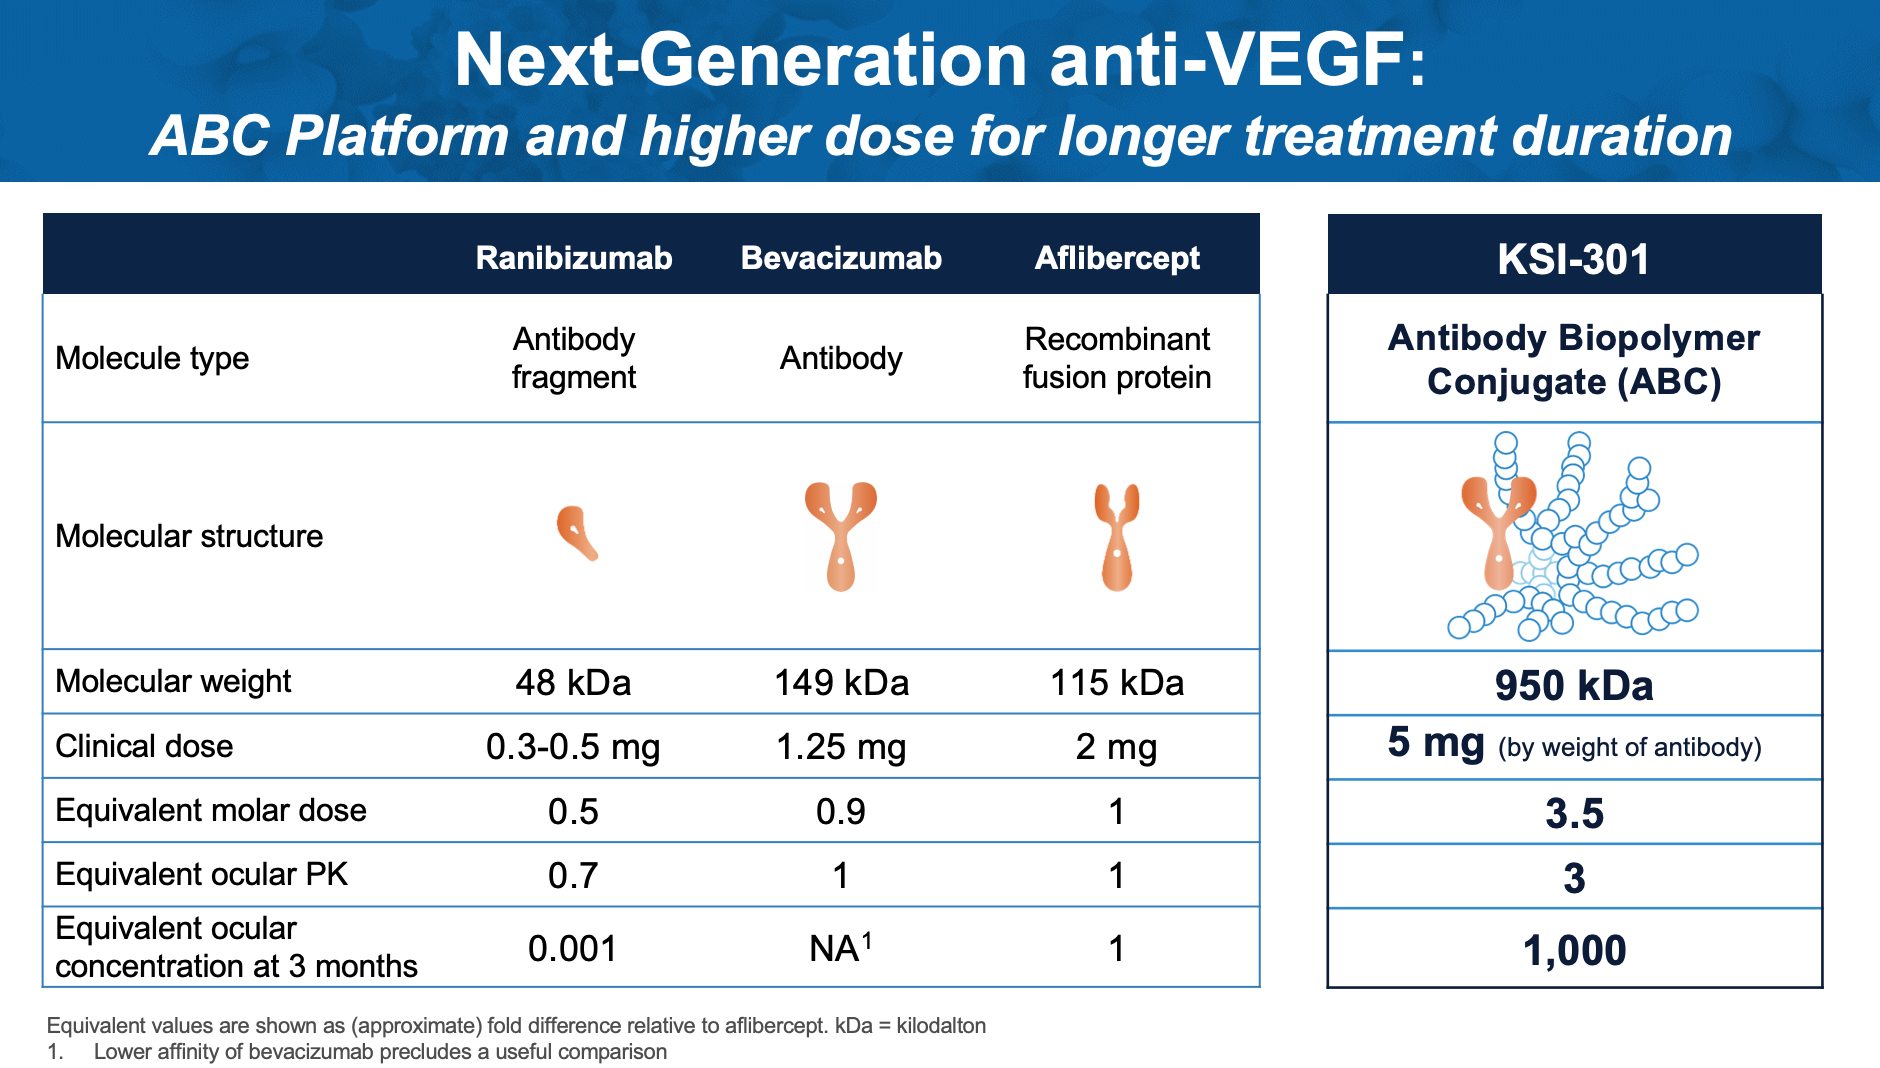 Figure 1. Next-generation anti-VEGF: ABC platform and higher dose for longer treatment duration.